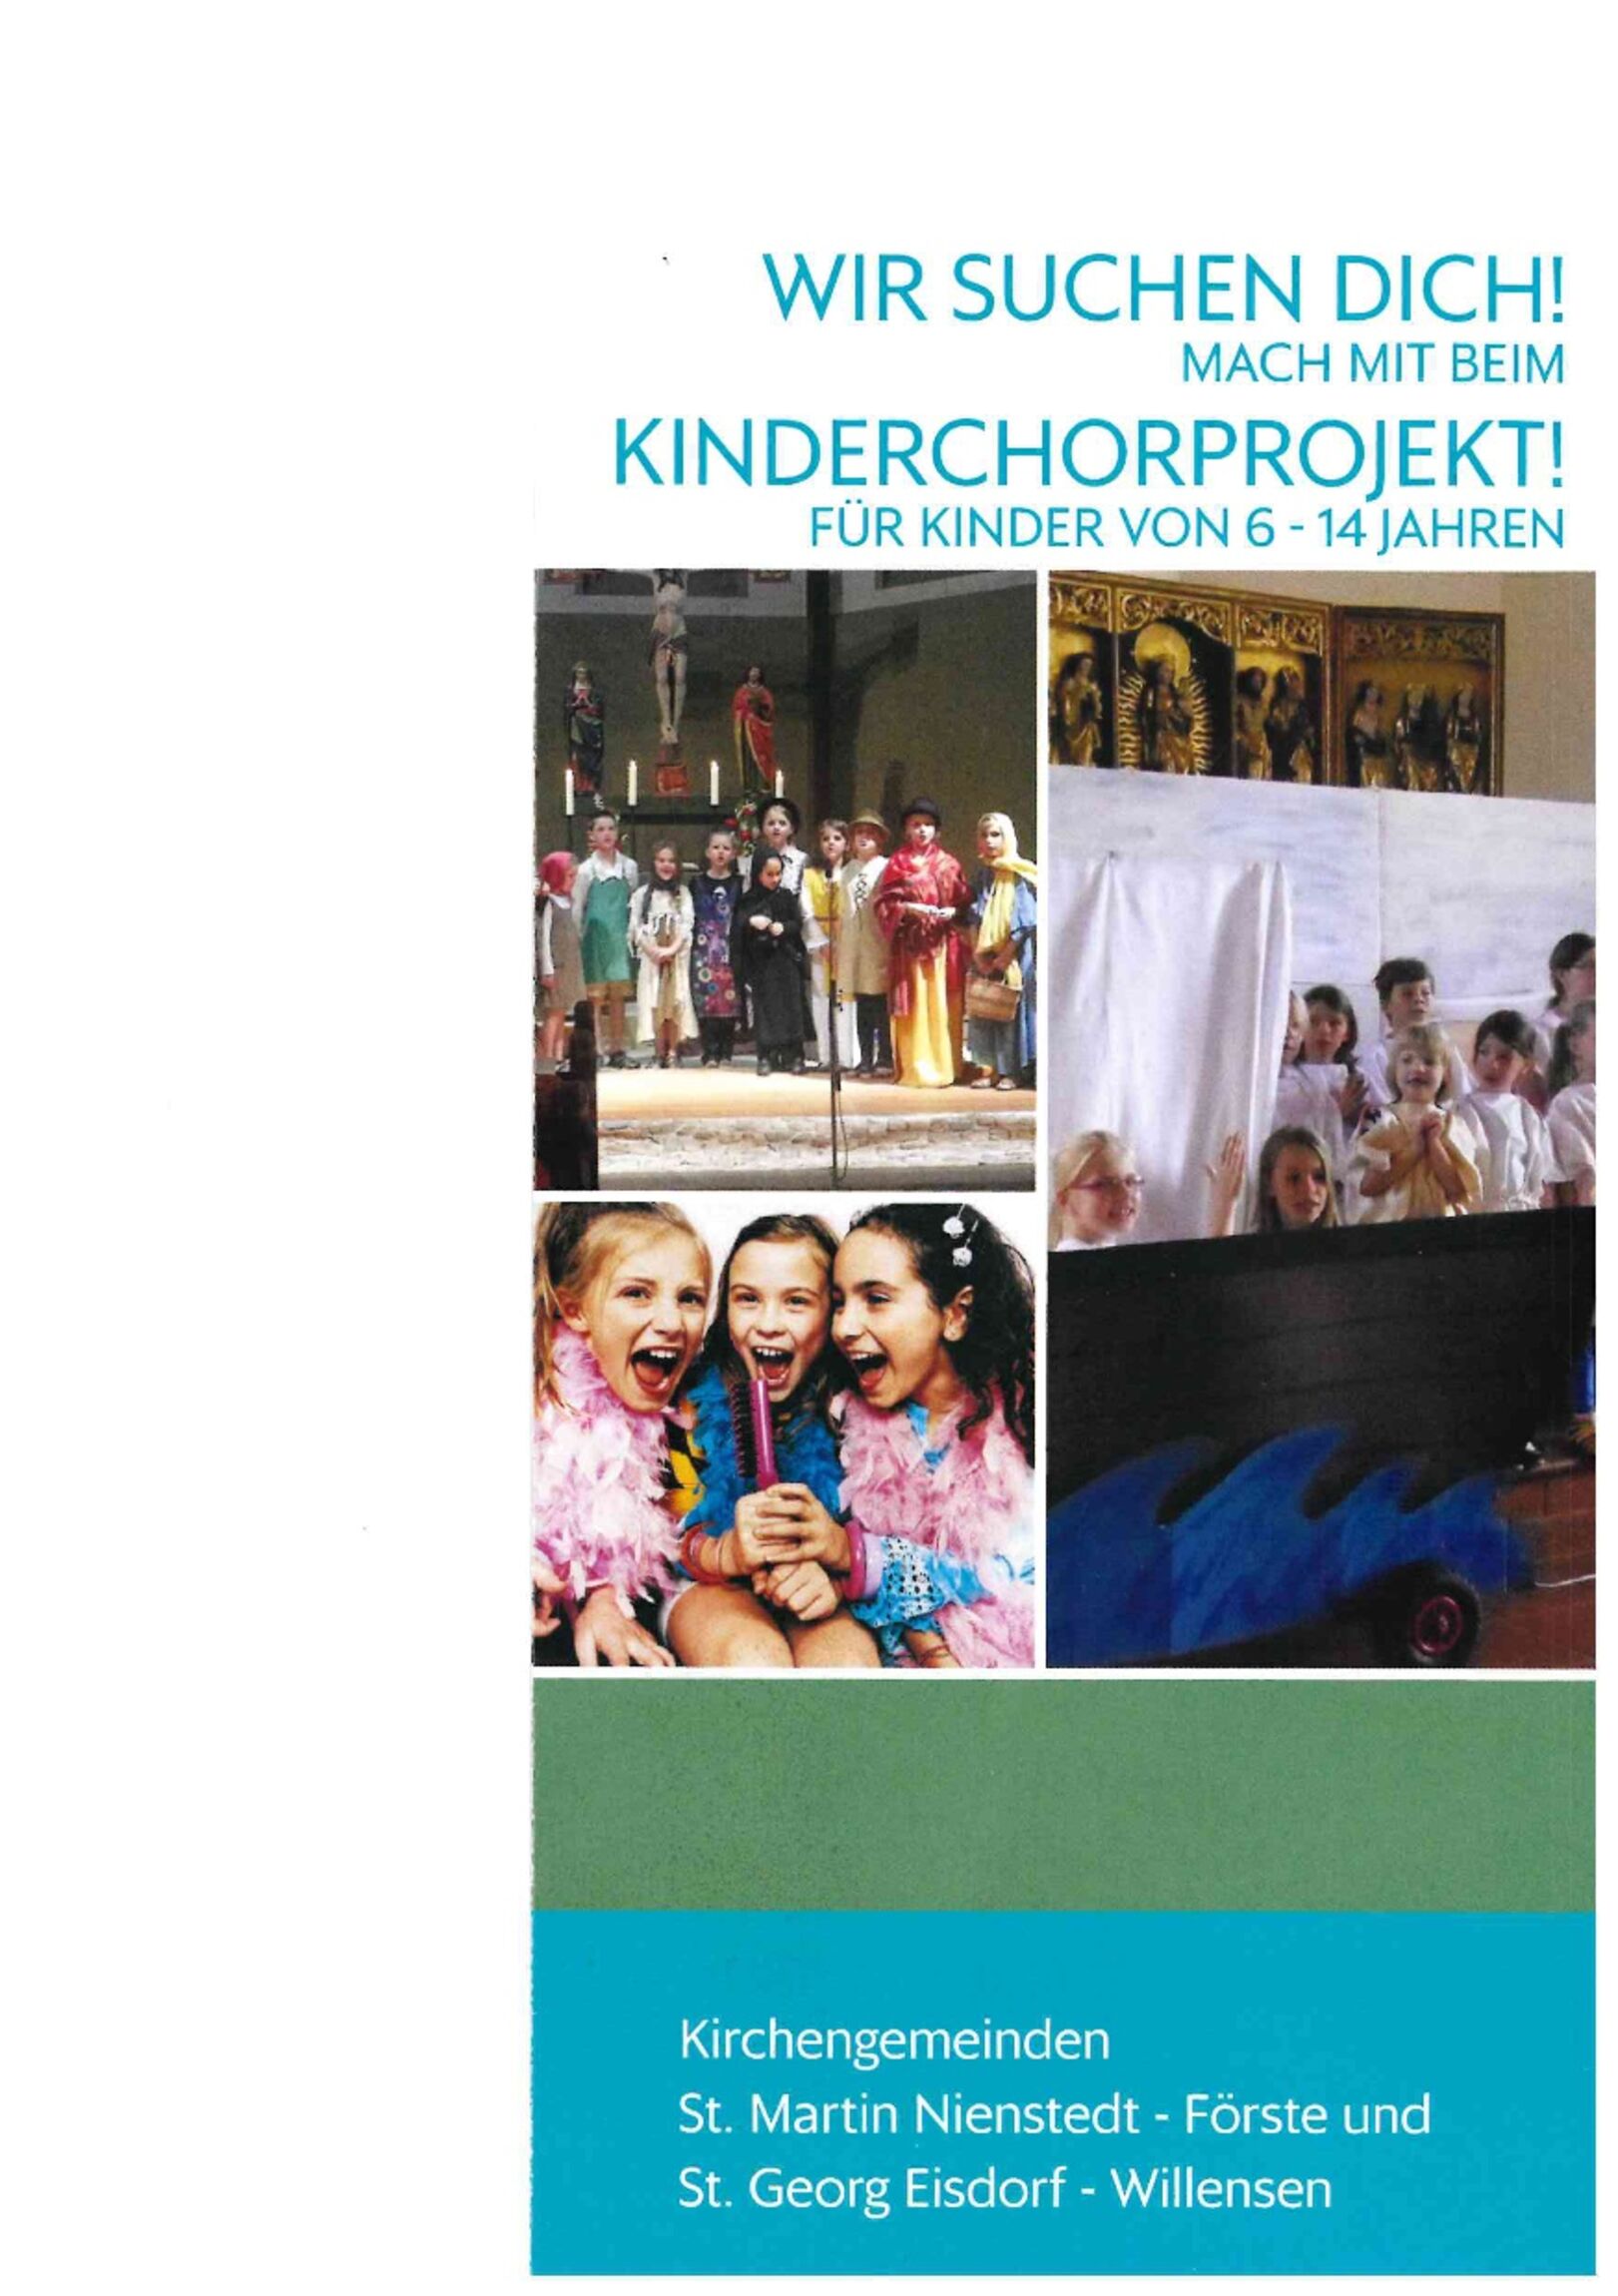 2018-Chorprojekt-DeckblattA5-Flyer